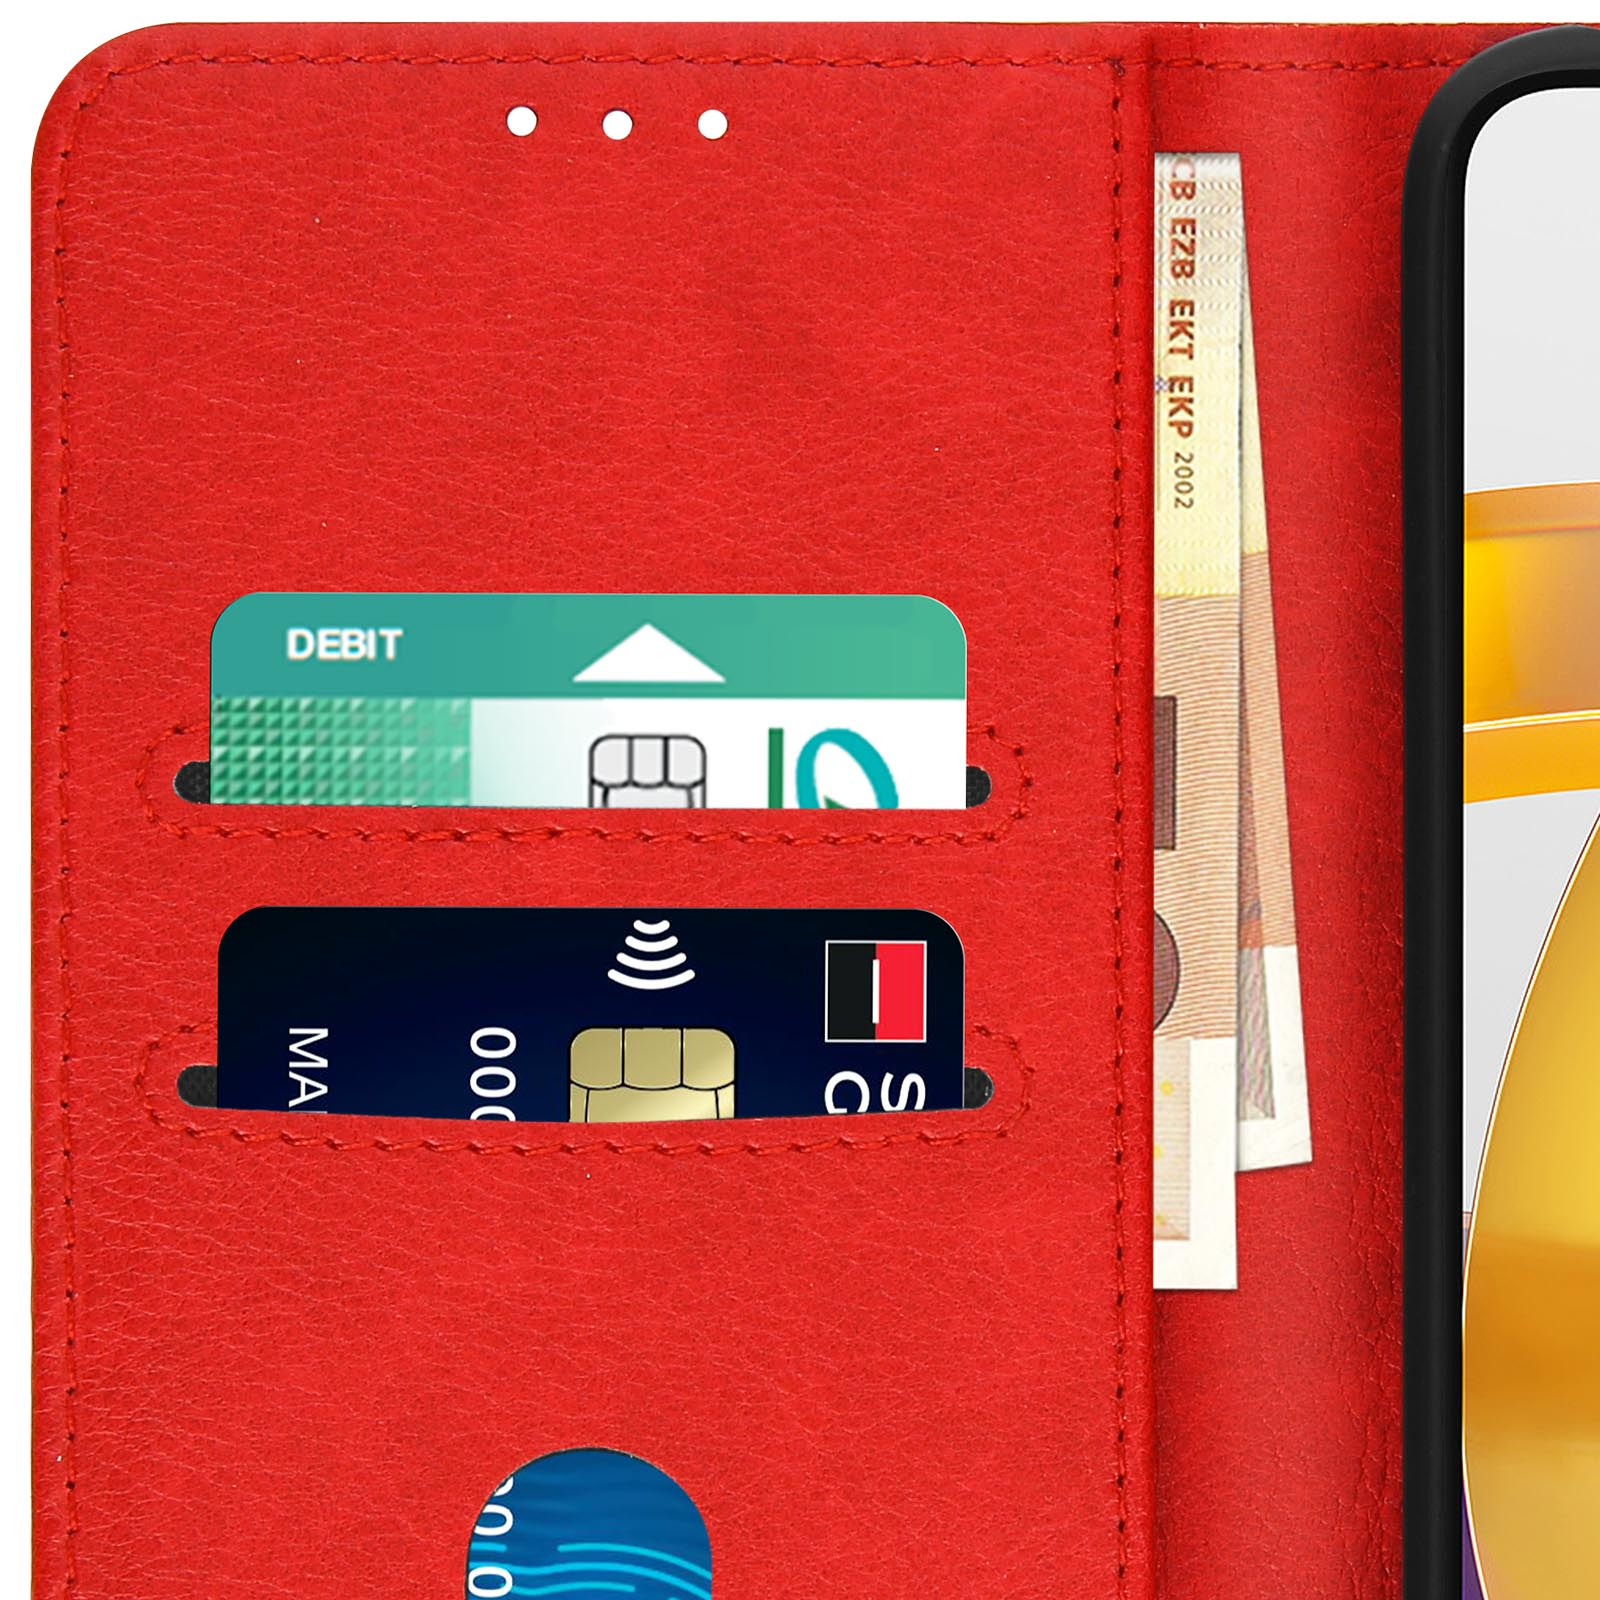 AVIZAR Chesterfield Series, 11S Note Xiaomi, 5G, Redmi Rot Bookcover